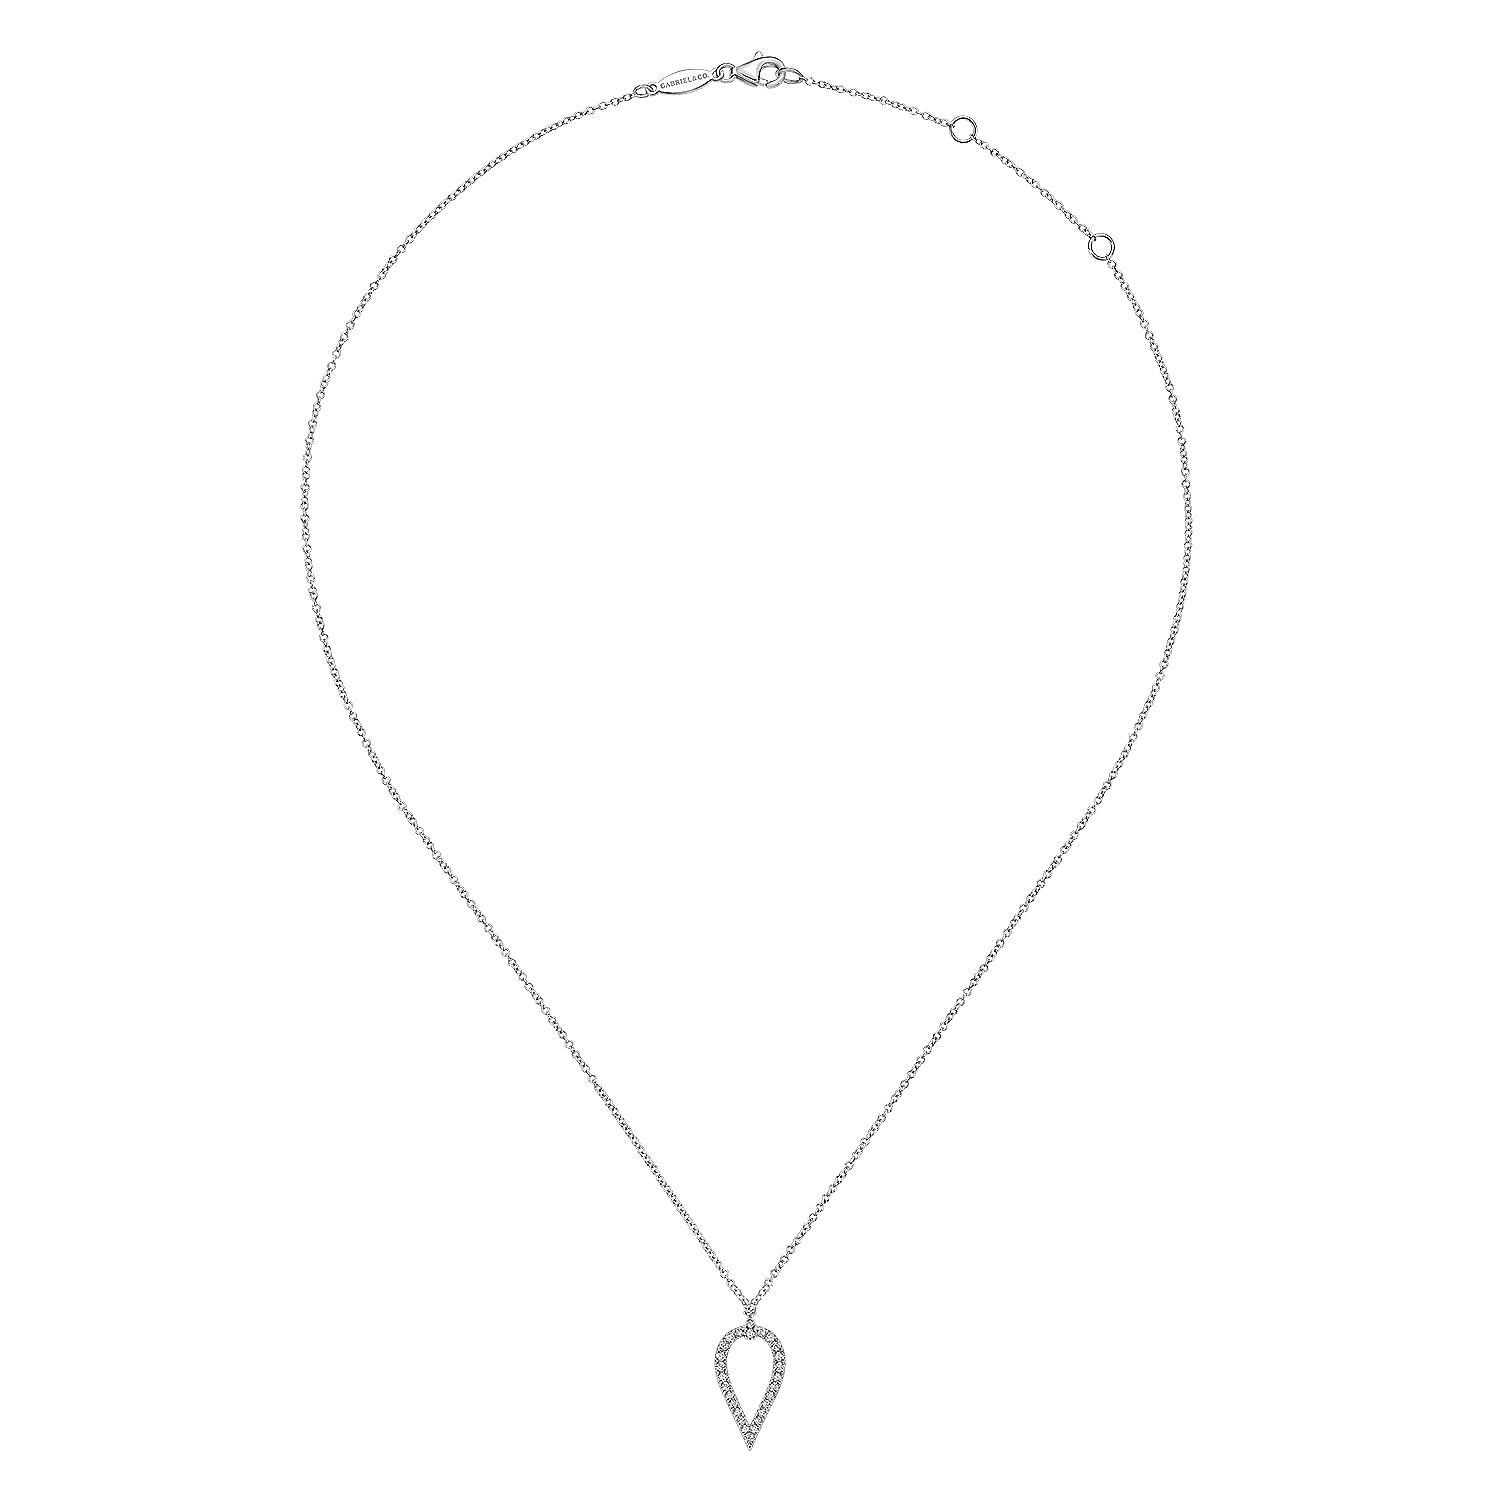 14K White Gold Inverted Teardrop Diamond Pendant Necklace